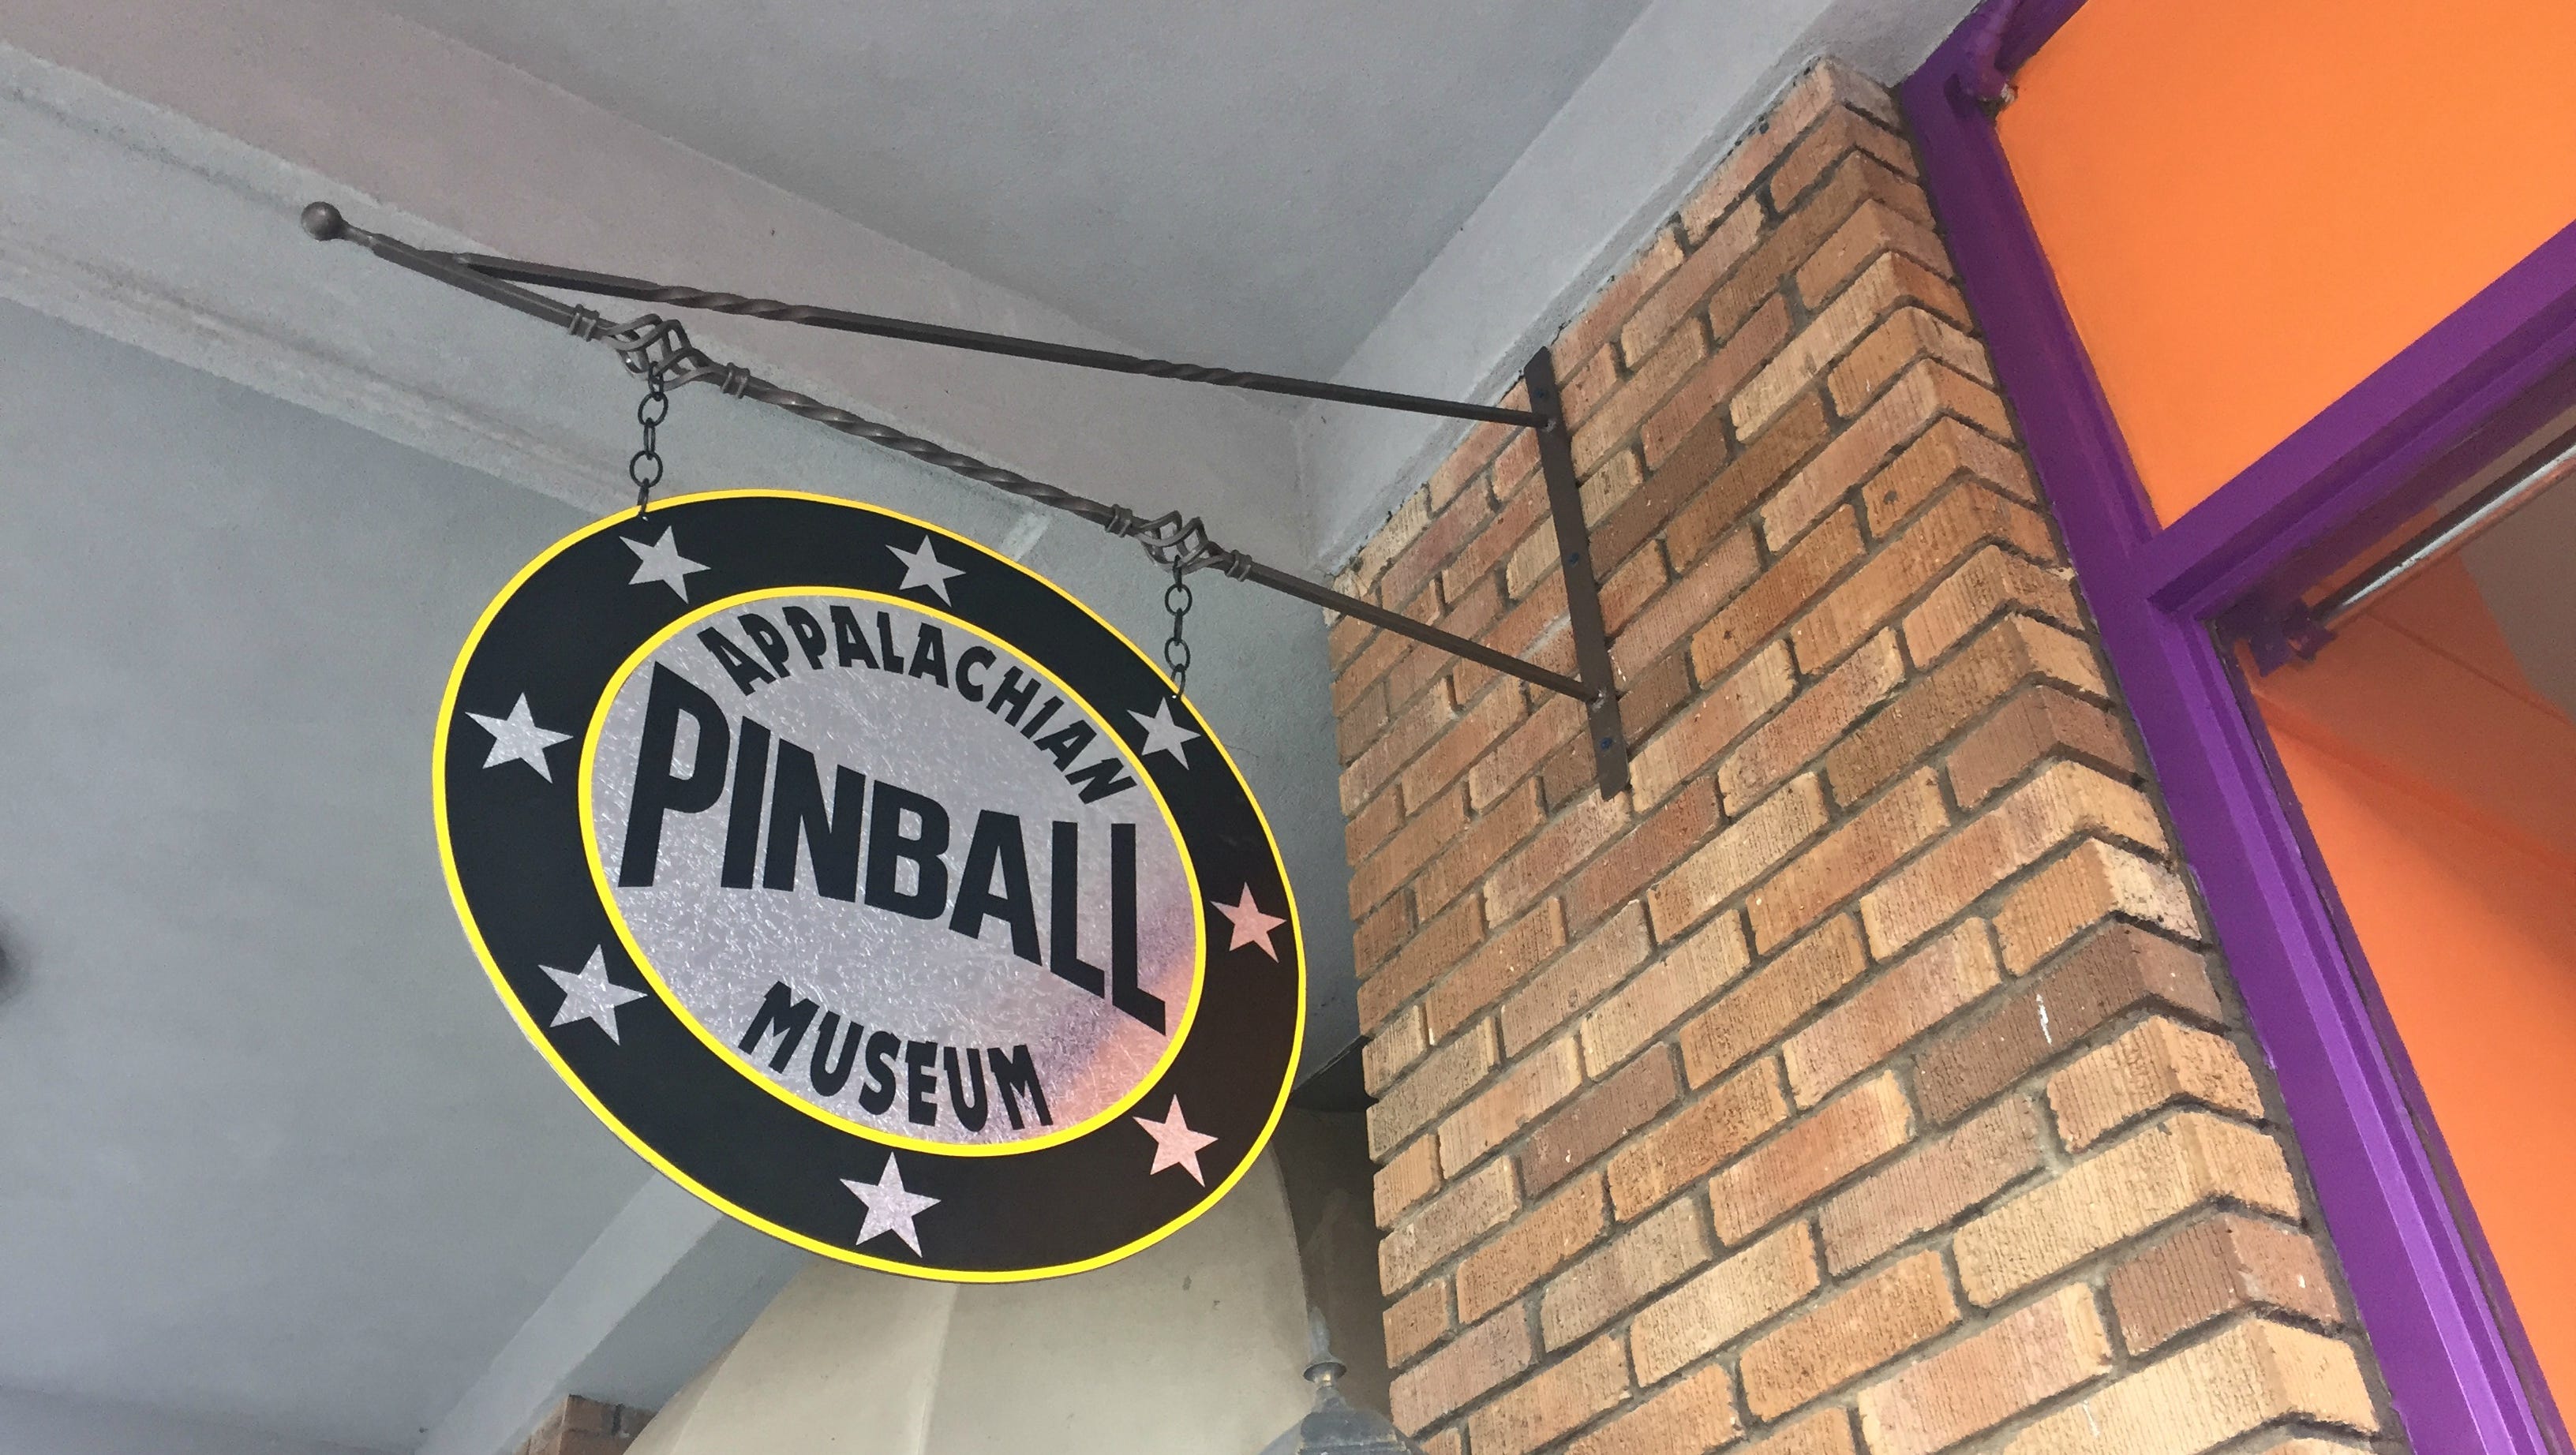 Appalachian Pinball Museum